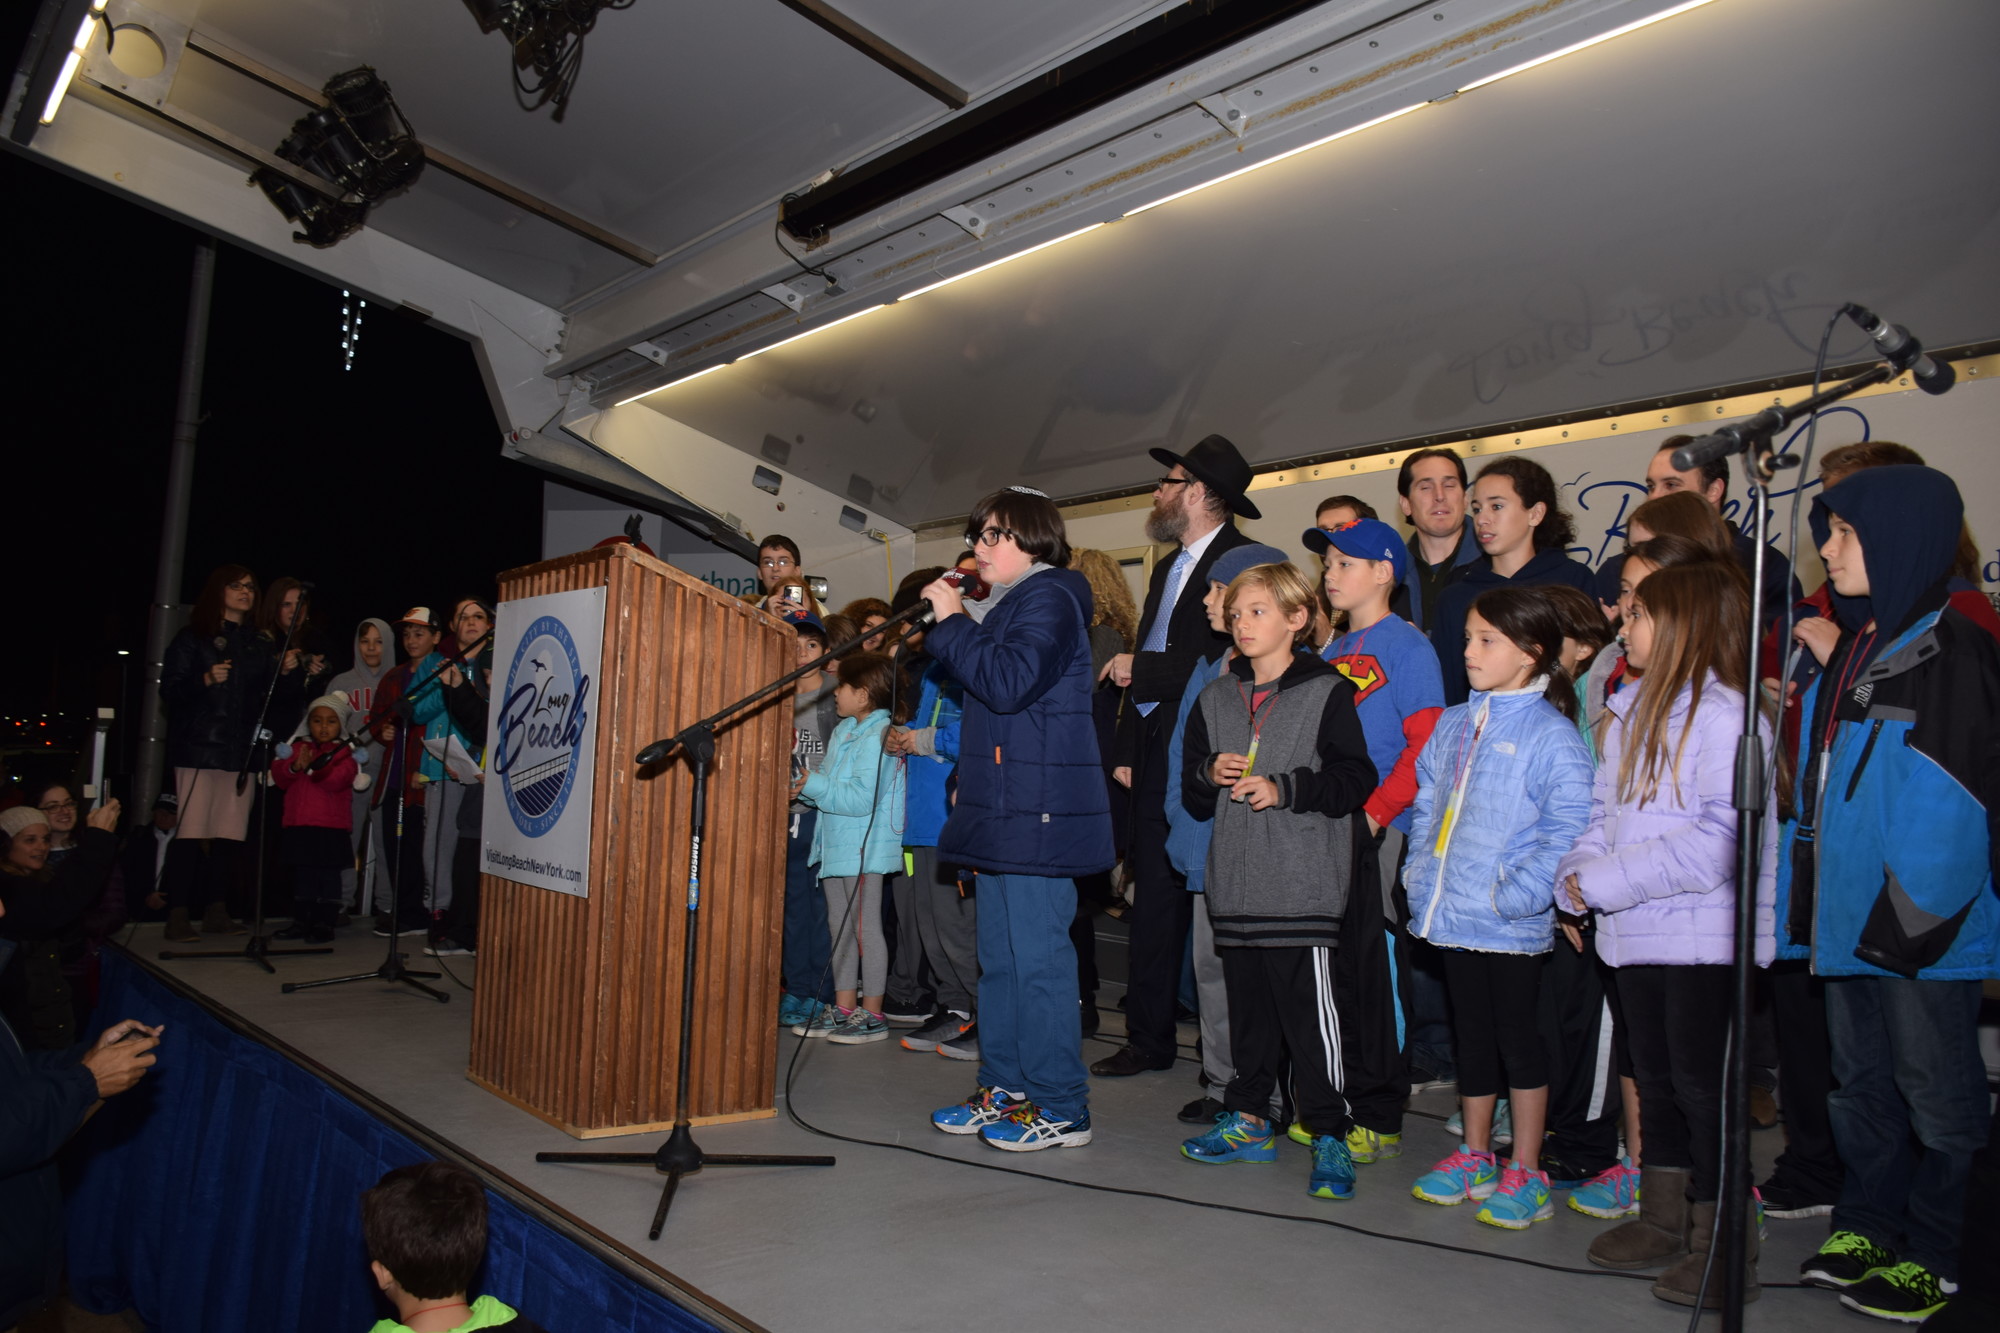 Soloist Jacob LoCascio led his fellow Hebrew school students in singing Hanukkah songs at Sunday’s ceremony.